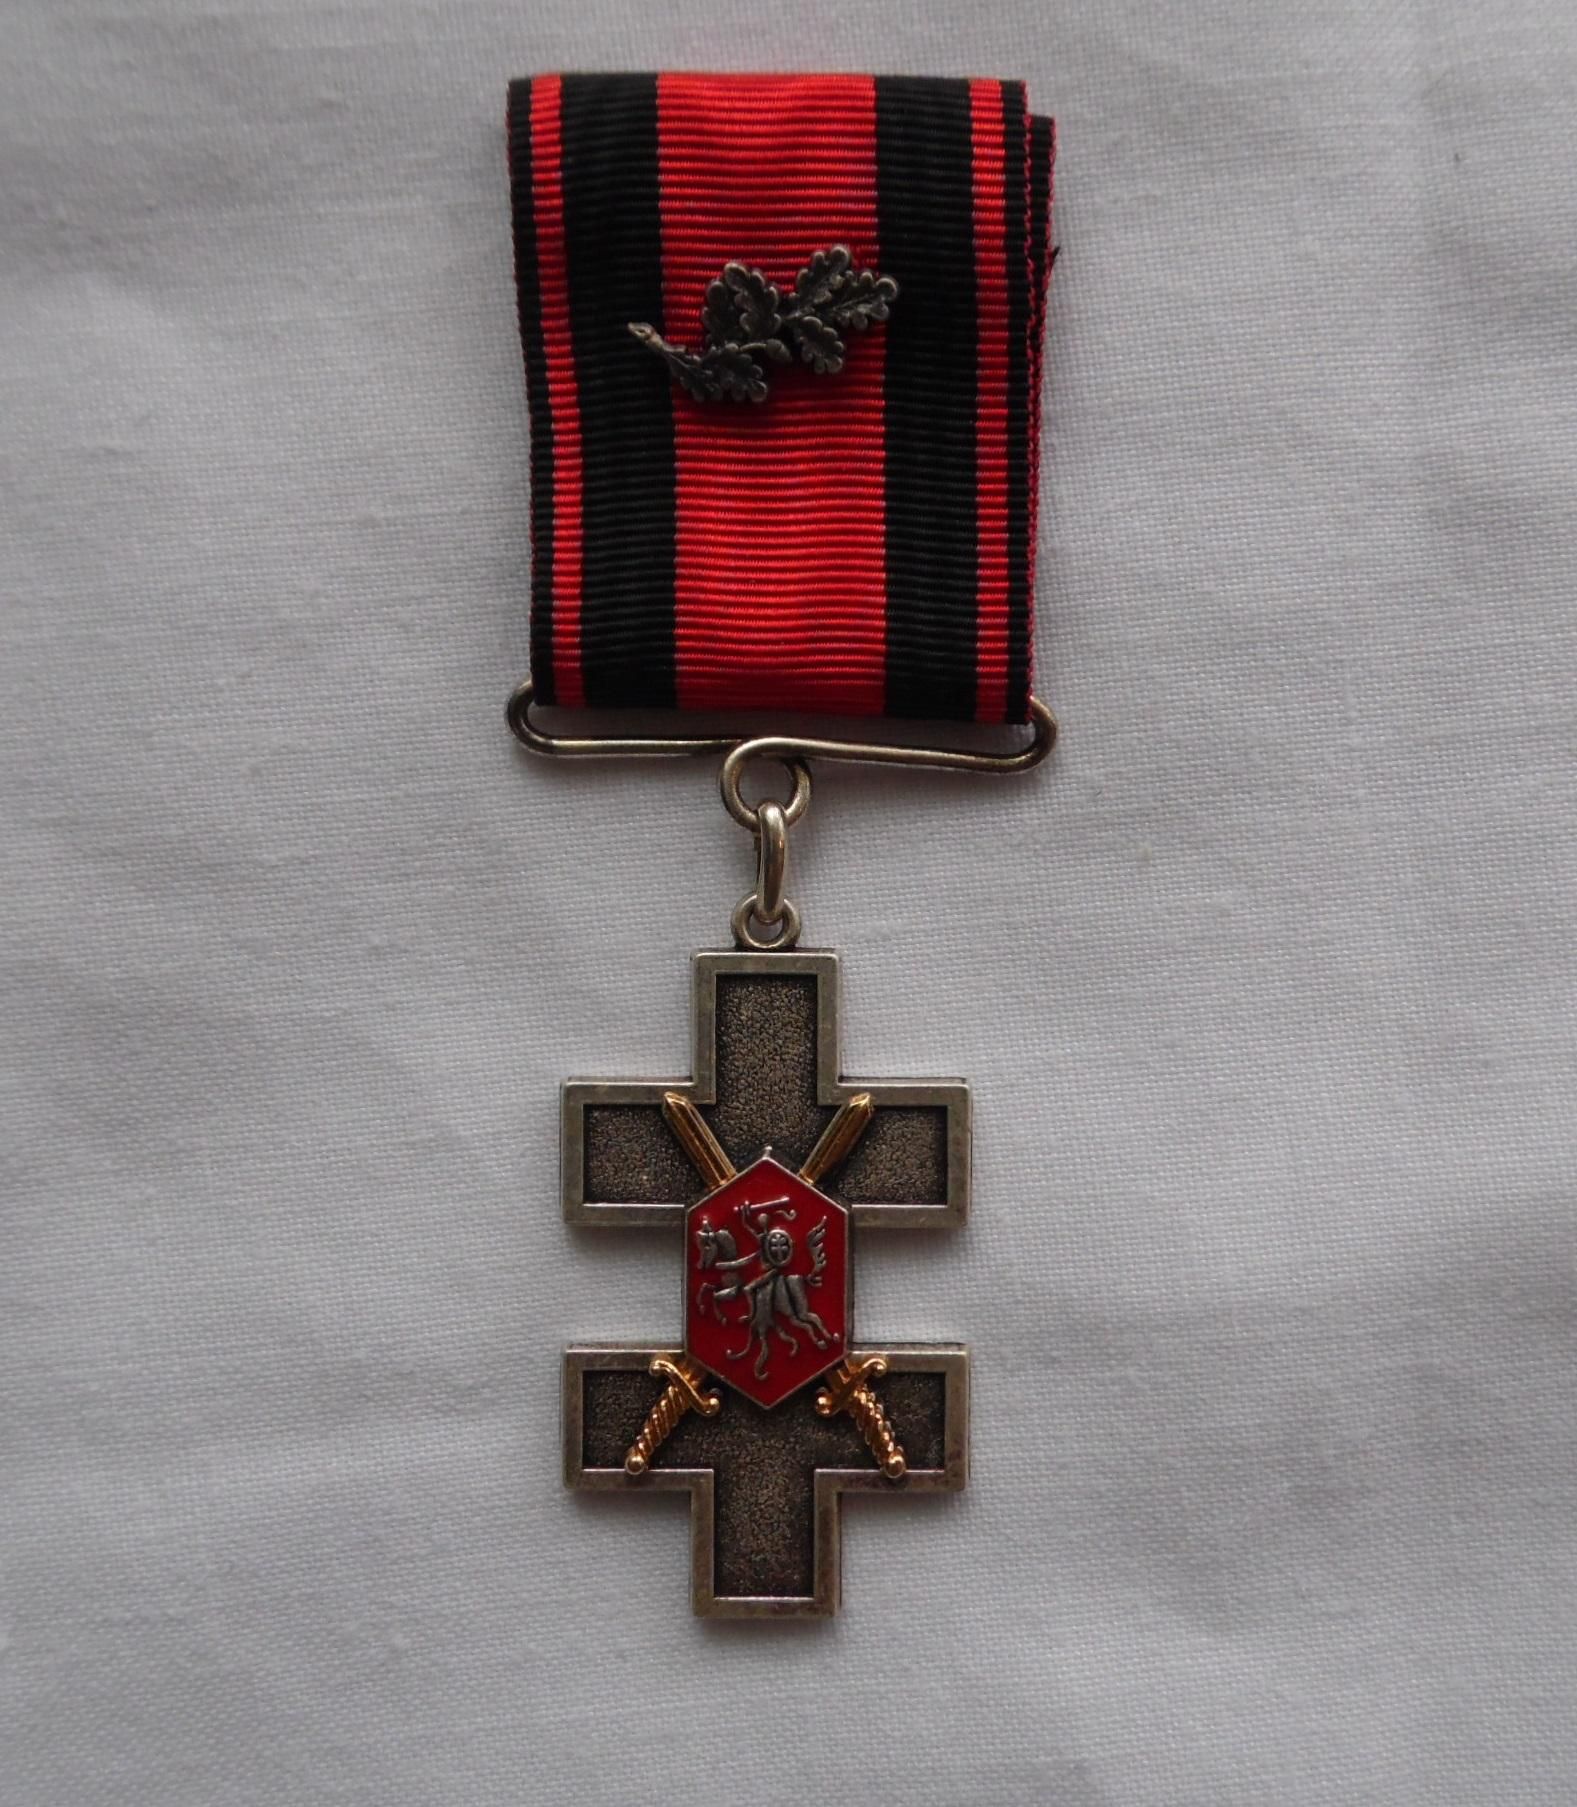 Орден Крест Витиса III степени 1927 года. Из коллекции Г. Сакалаускаса